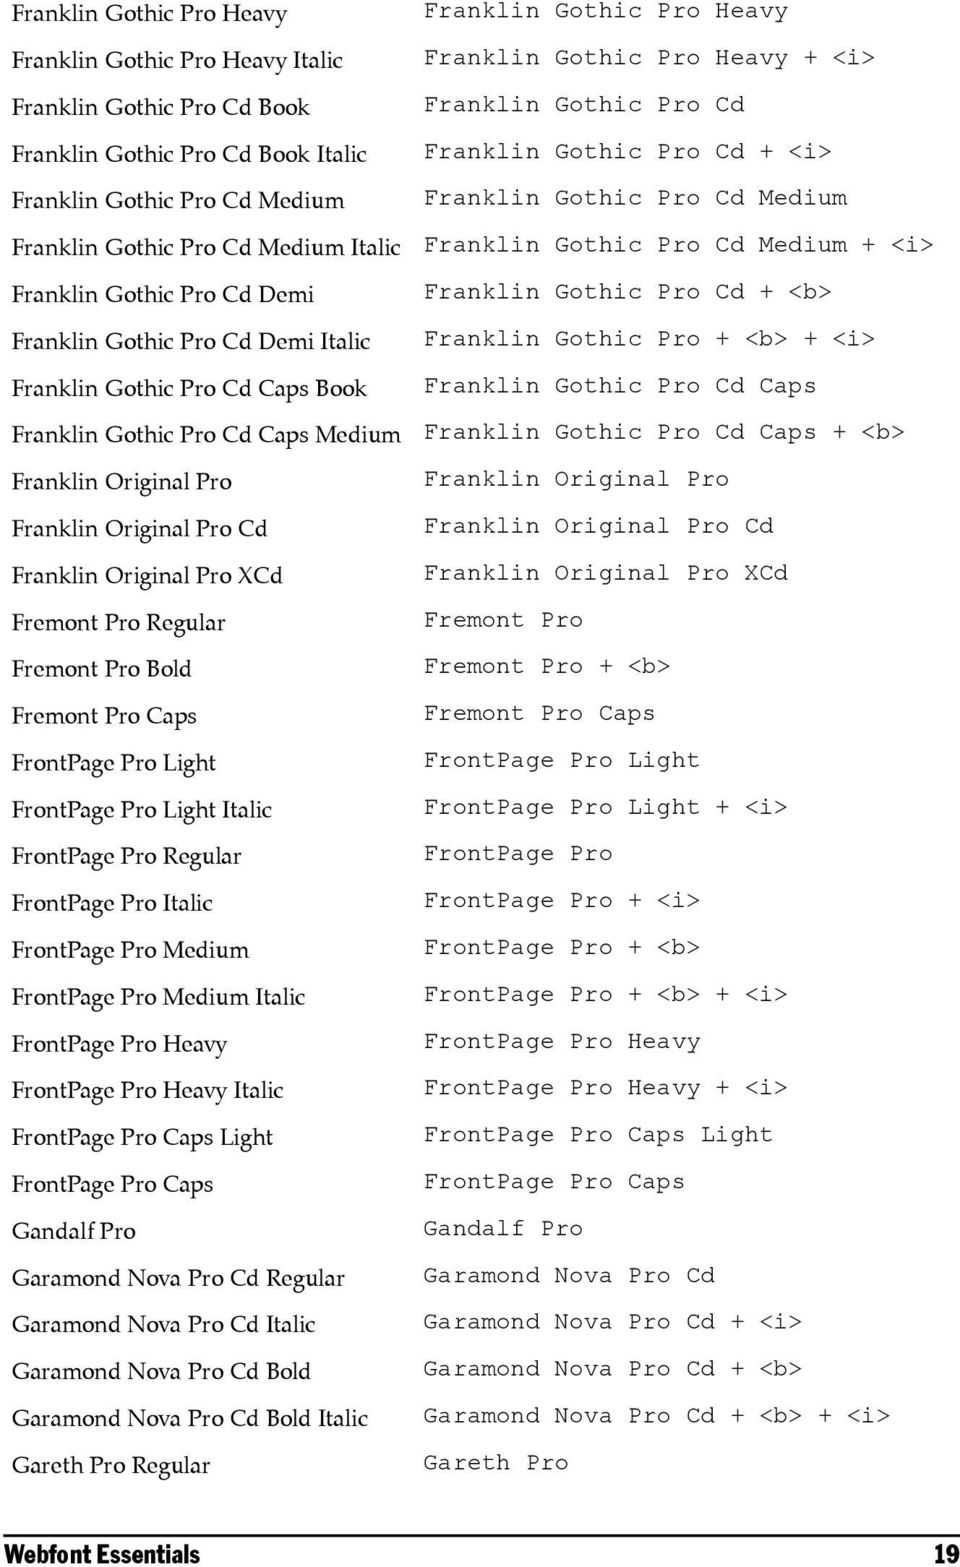 Fremont Pro Regular Fremont Pro Bold Fremont Pro Caps FrontPage Pro Light FrontPage Pro Light Italic FrontPage Pro Regular FrontPage Pro Italic FrontPage Pro Medium FrontPage Pro Medium Italic